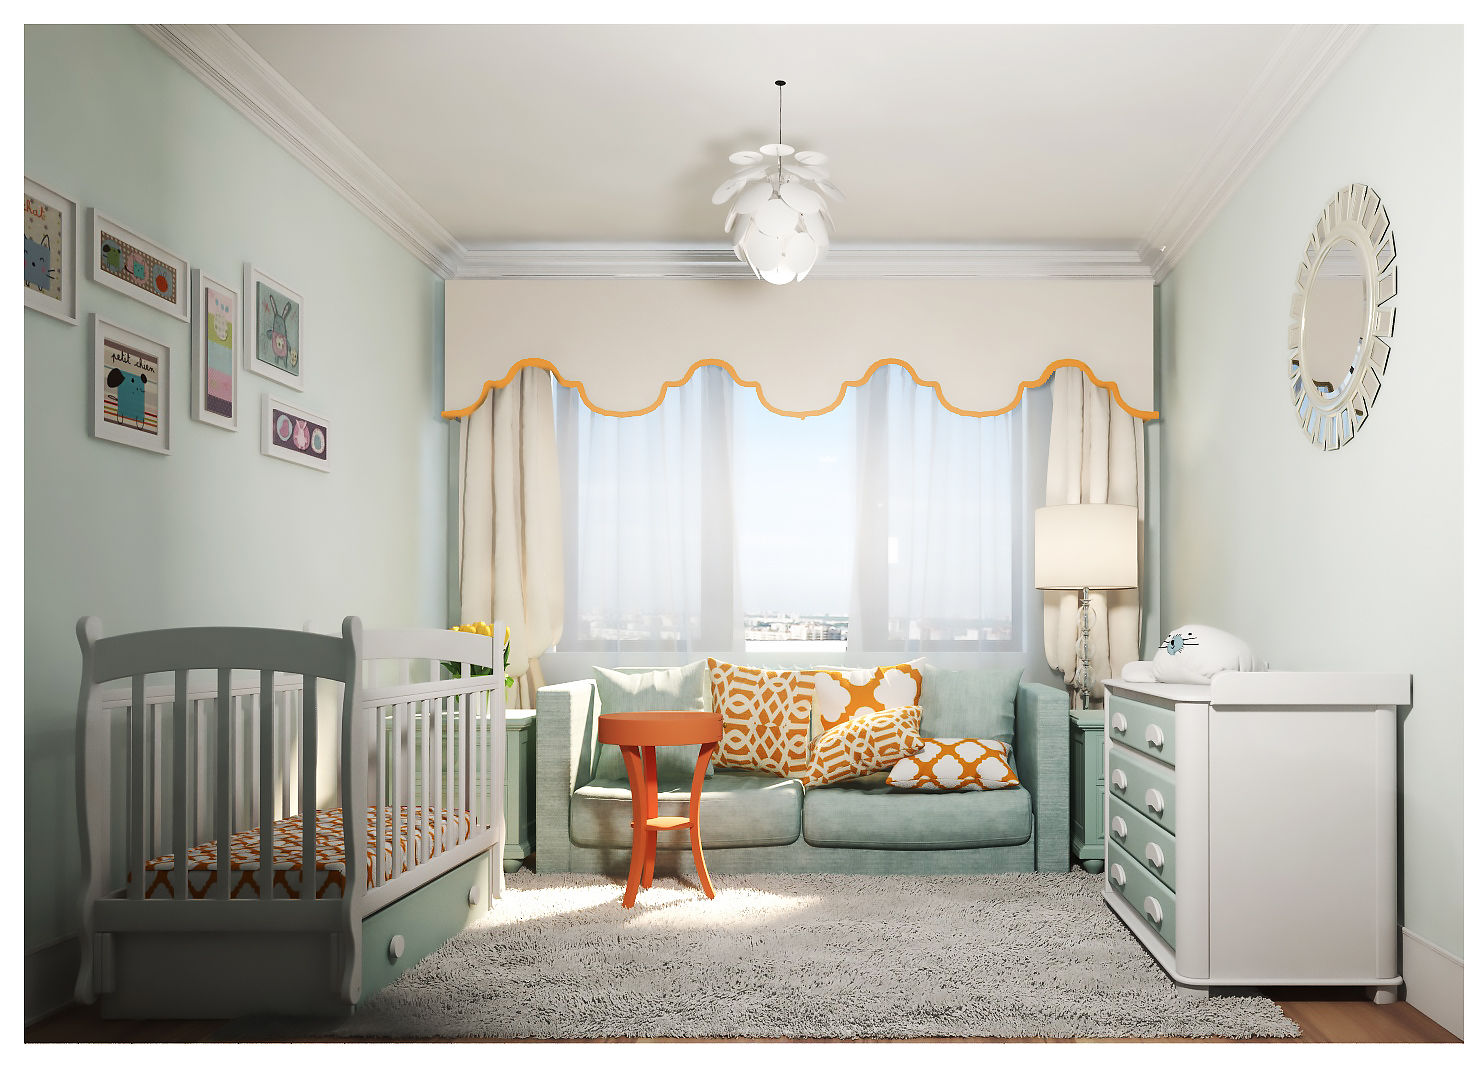 3-bedroom Apartment, Moscow , Alexander Krivov Alexander Krivov クラシックデザインの 子供部屋